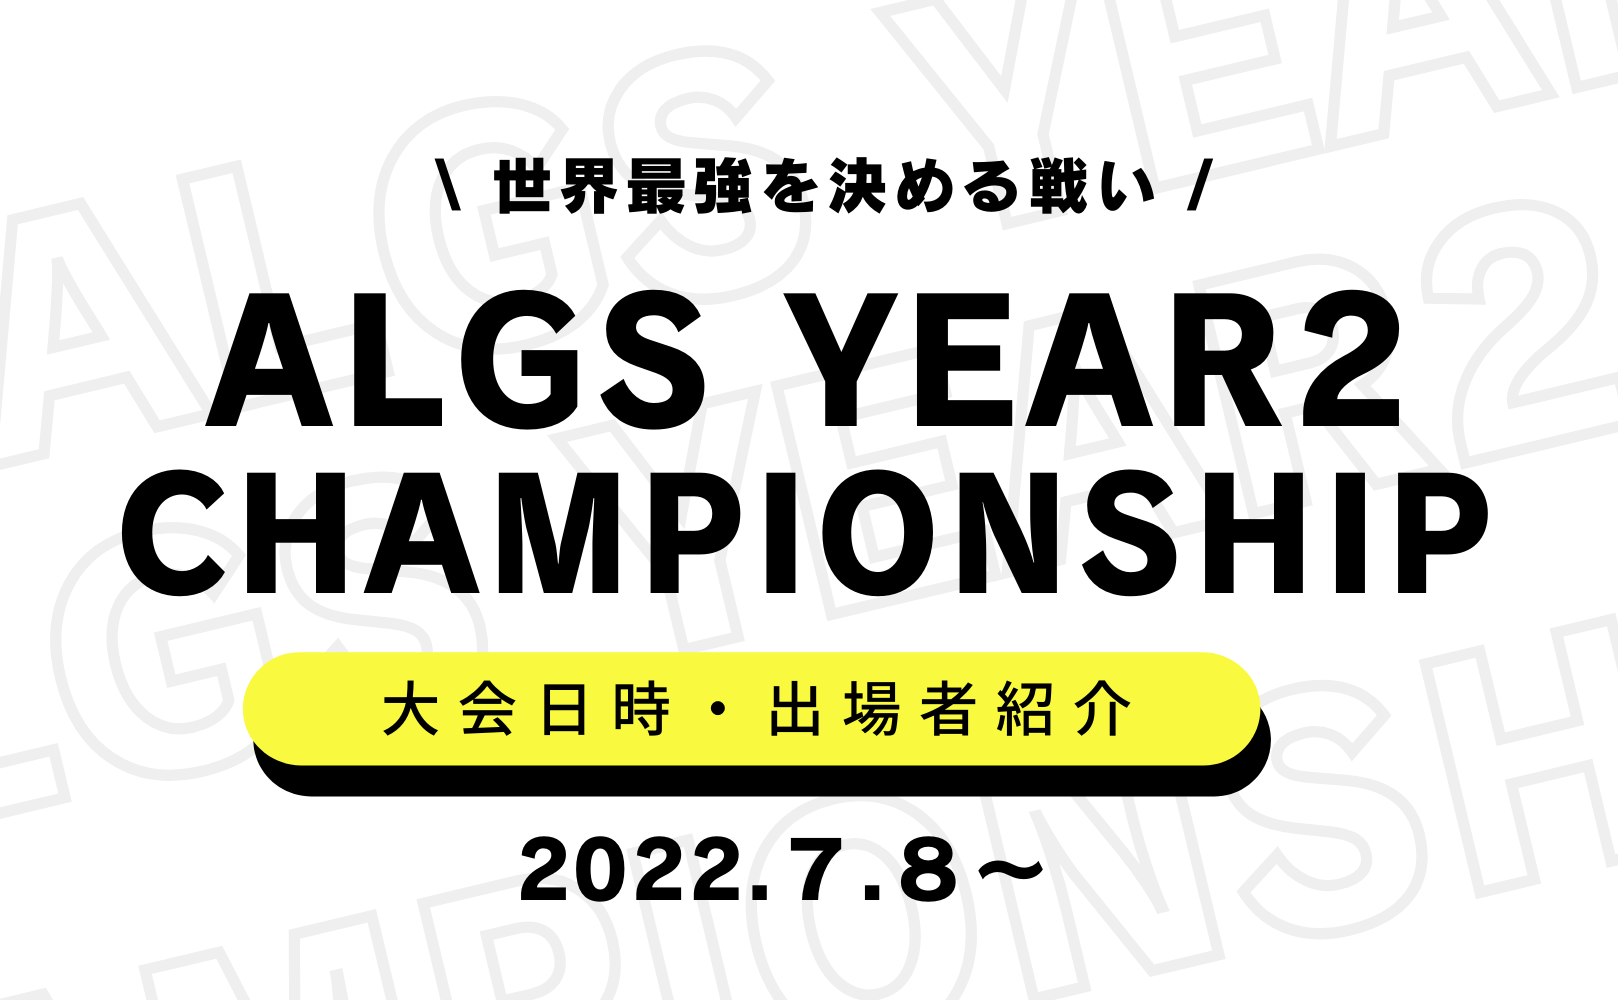 Acend fecha ALGS Championship com Top 11 mundial